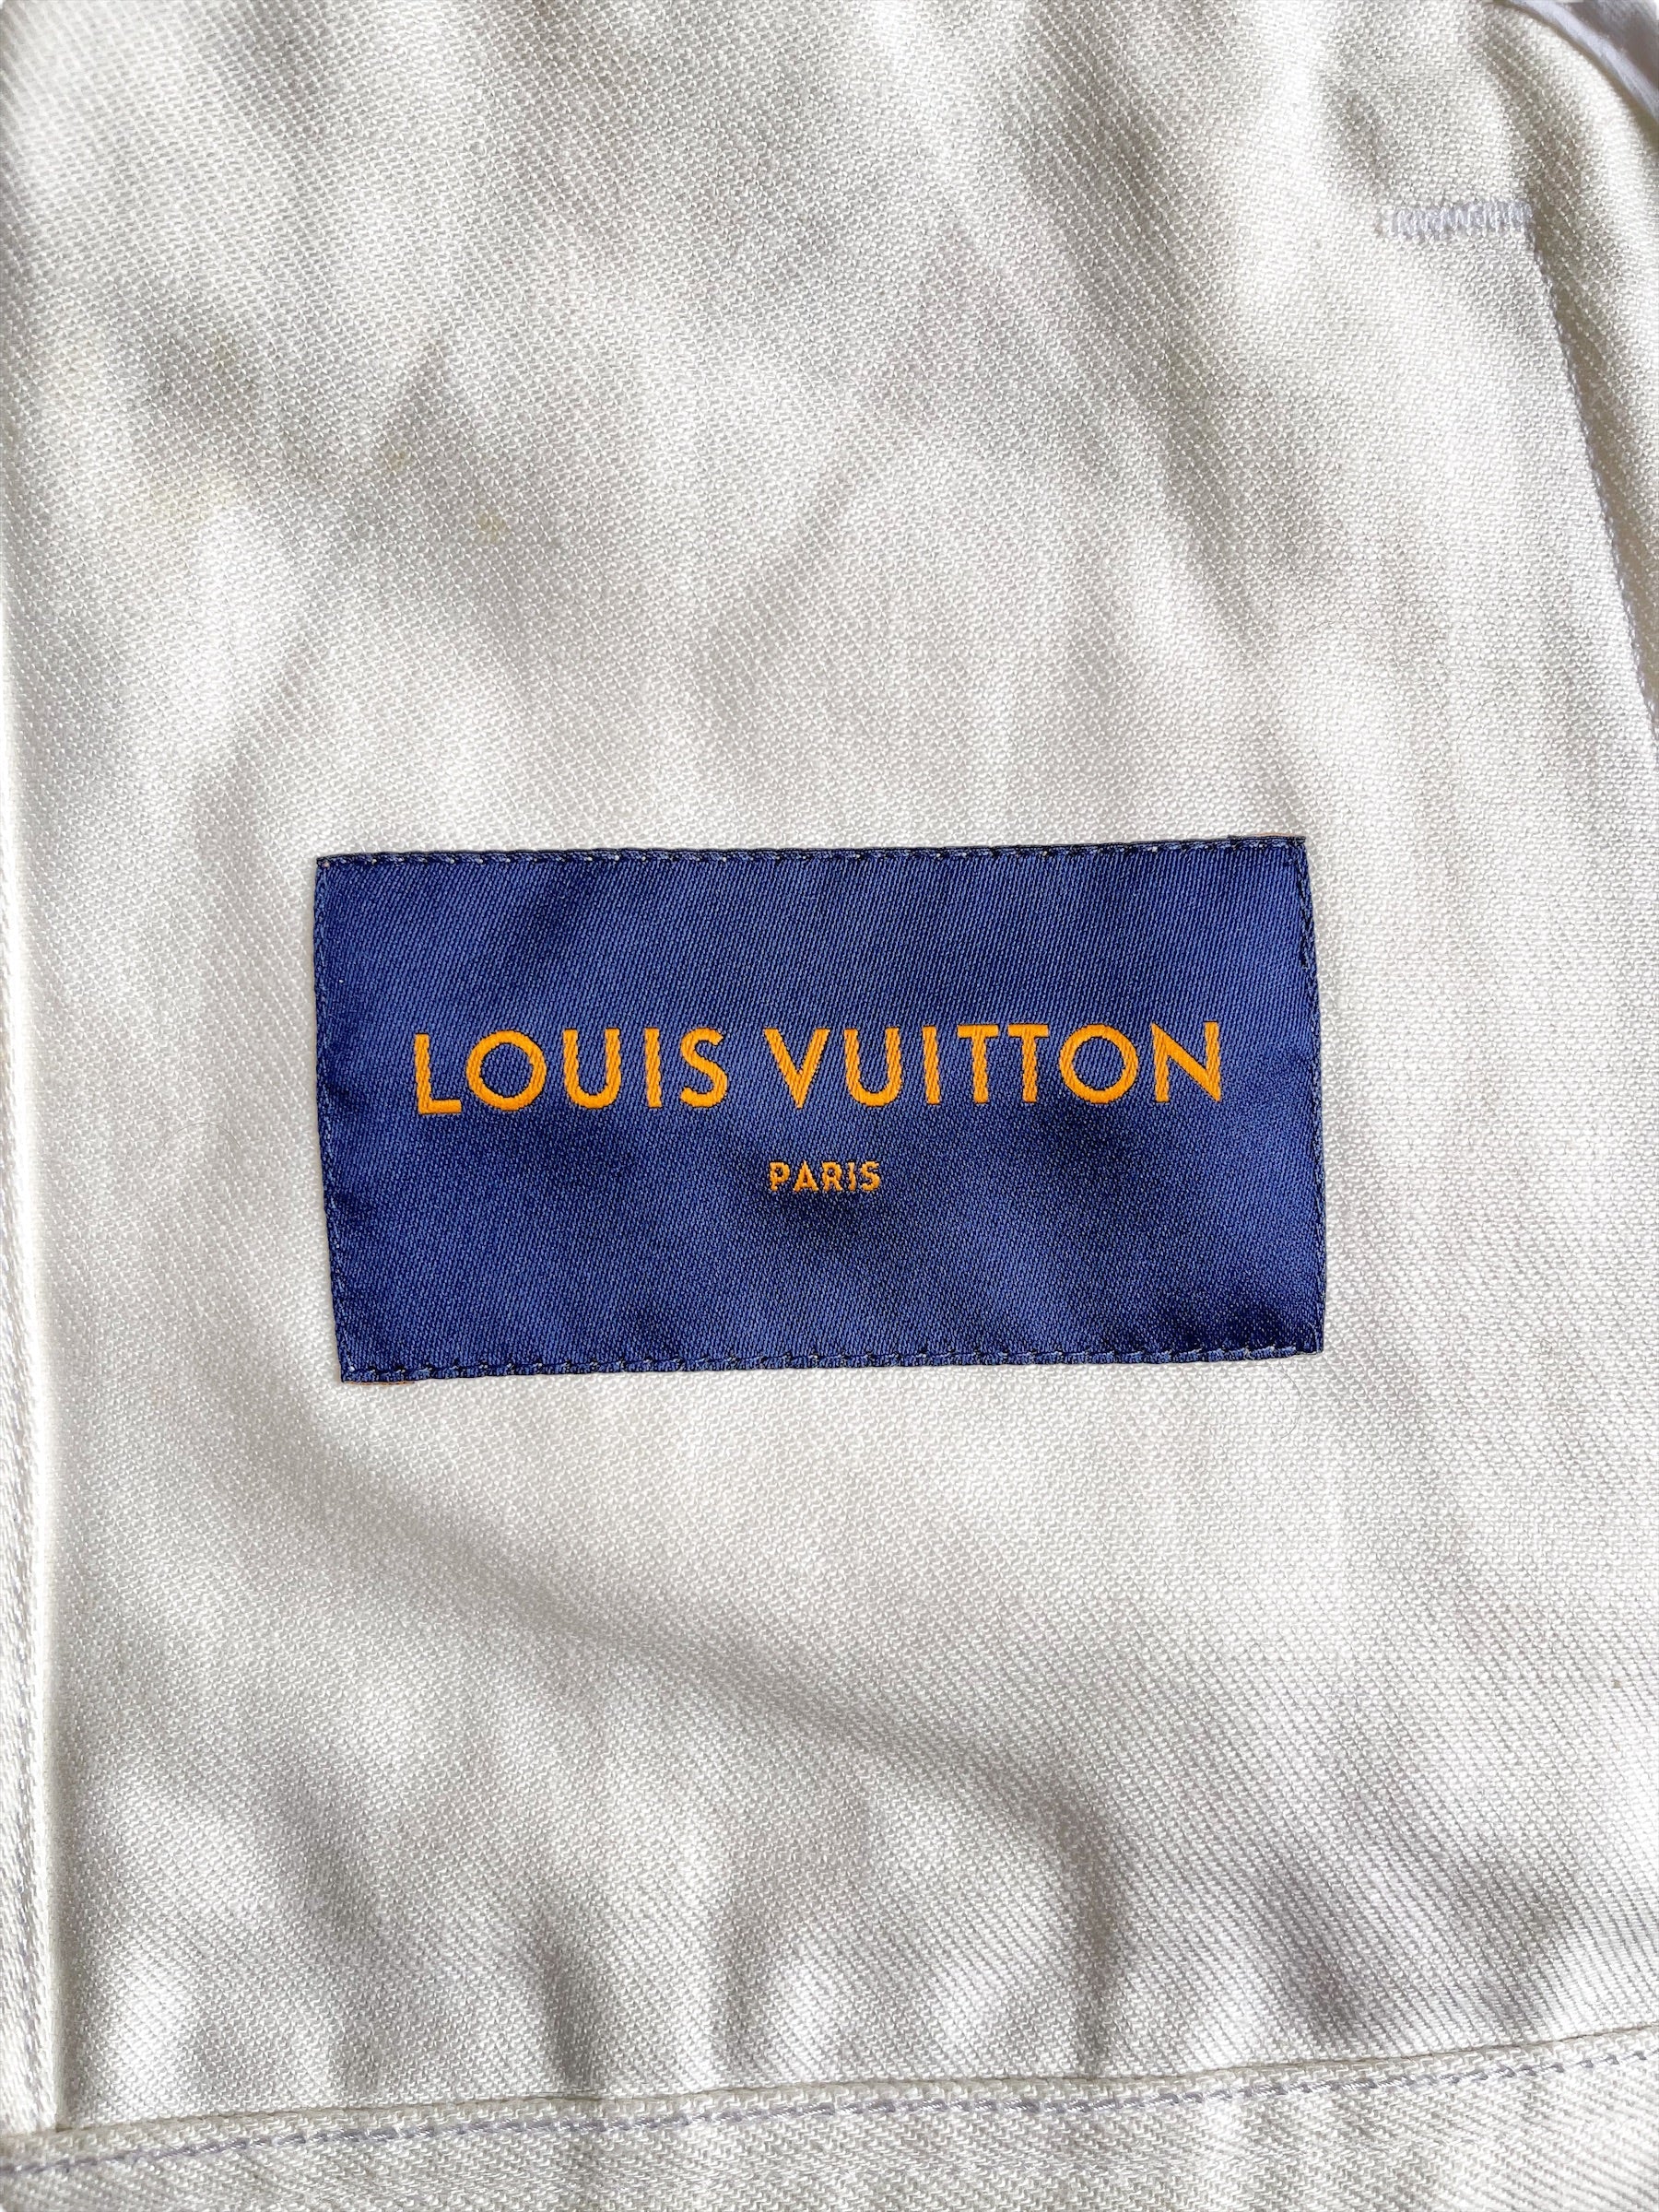 Louis Vuitton - White Label Room